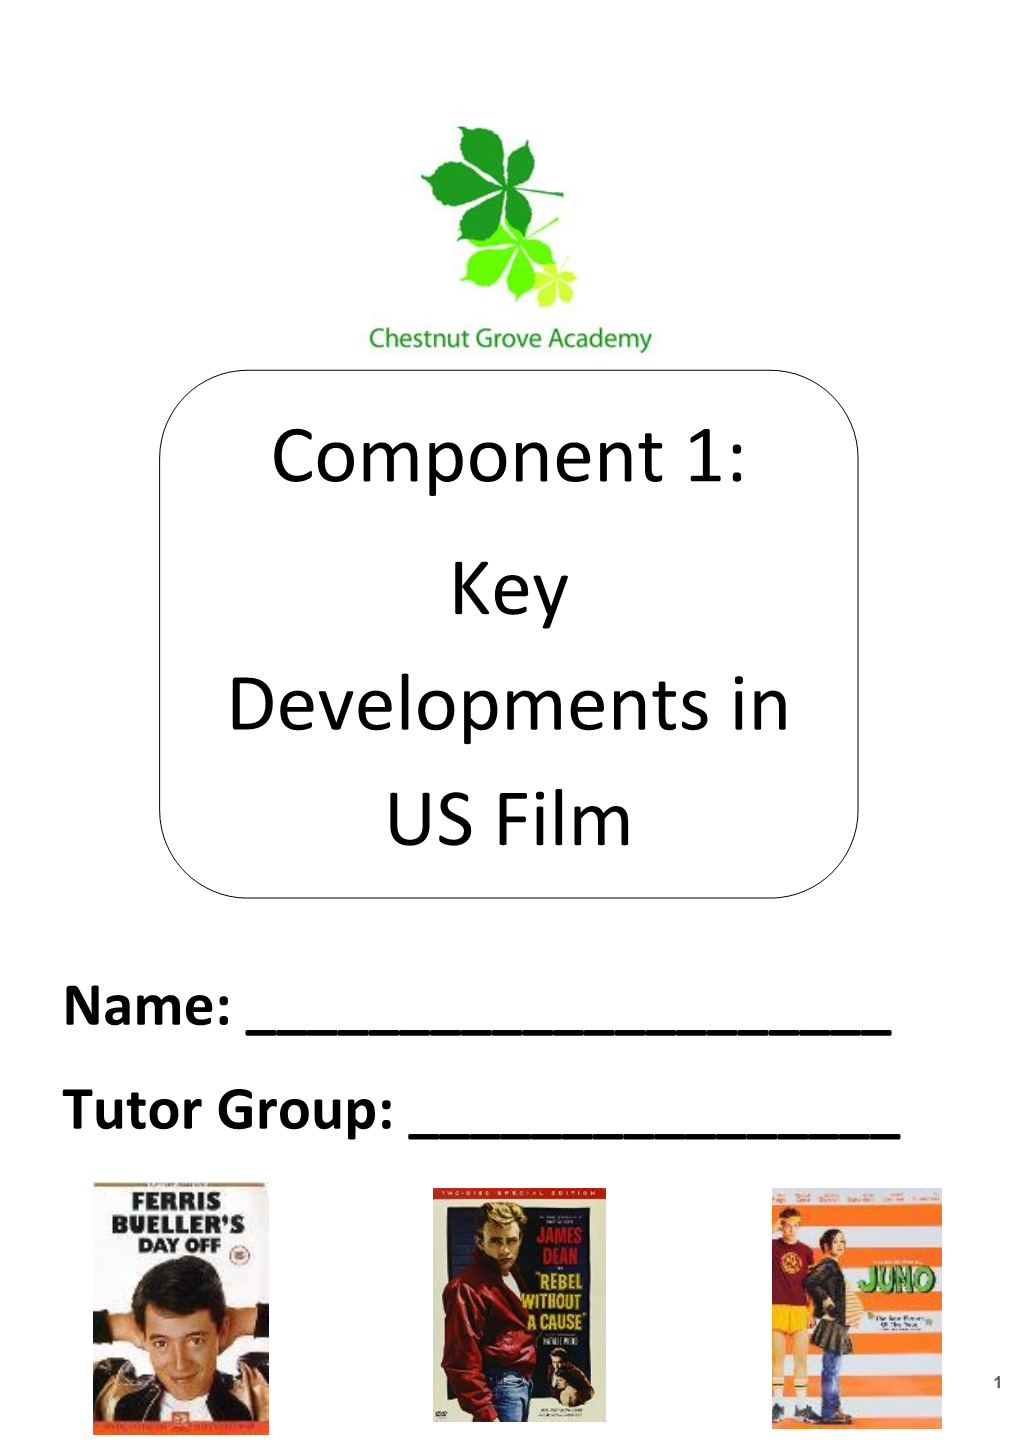 Component 1: Key Developments in US Film (35%)